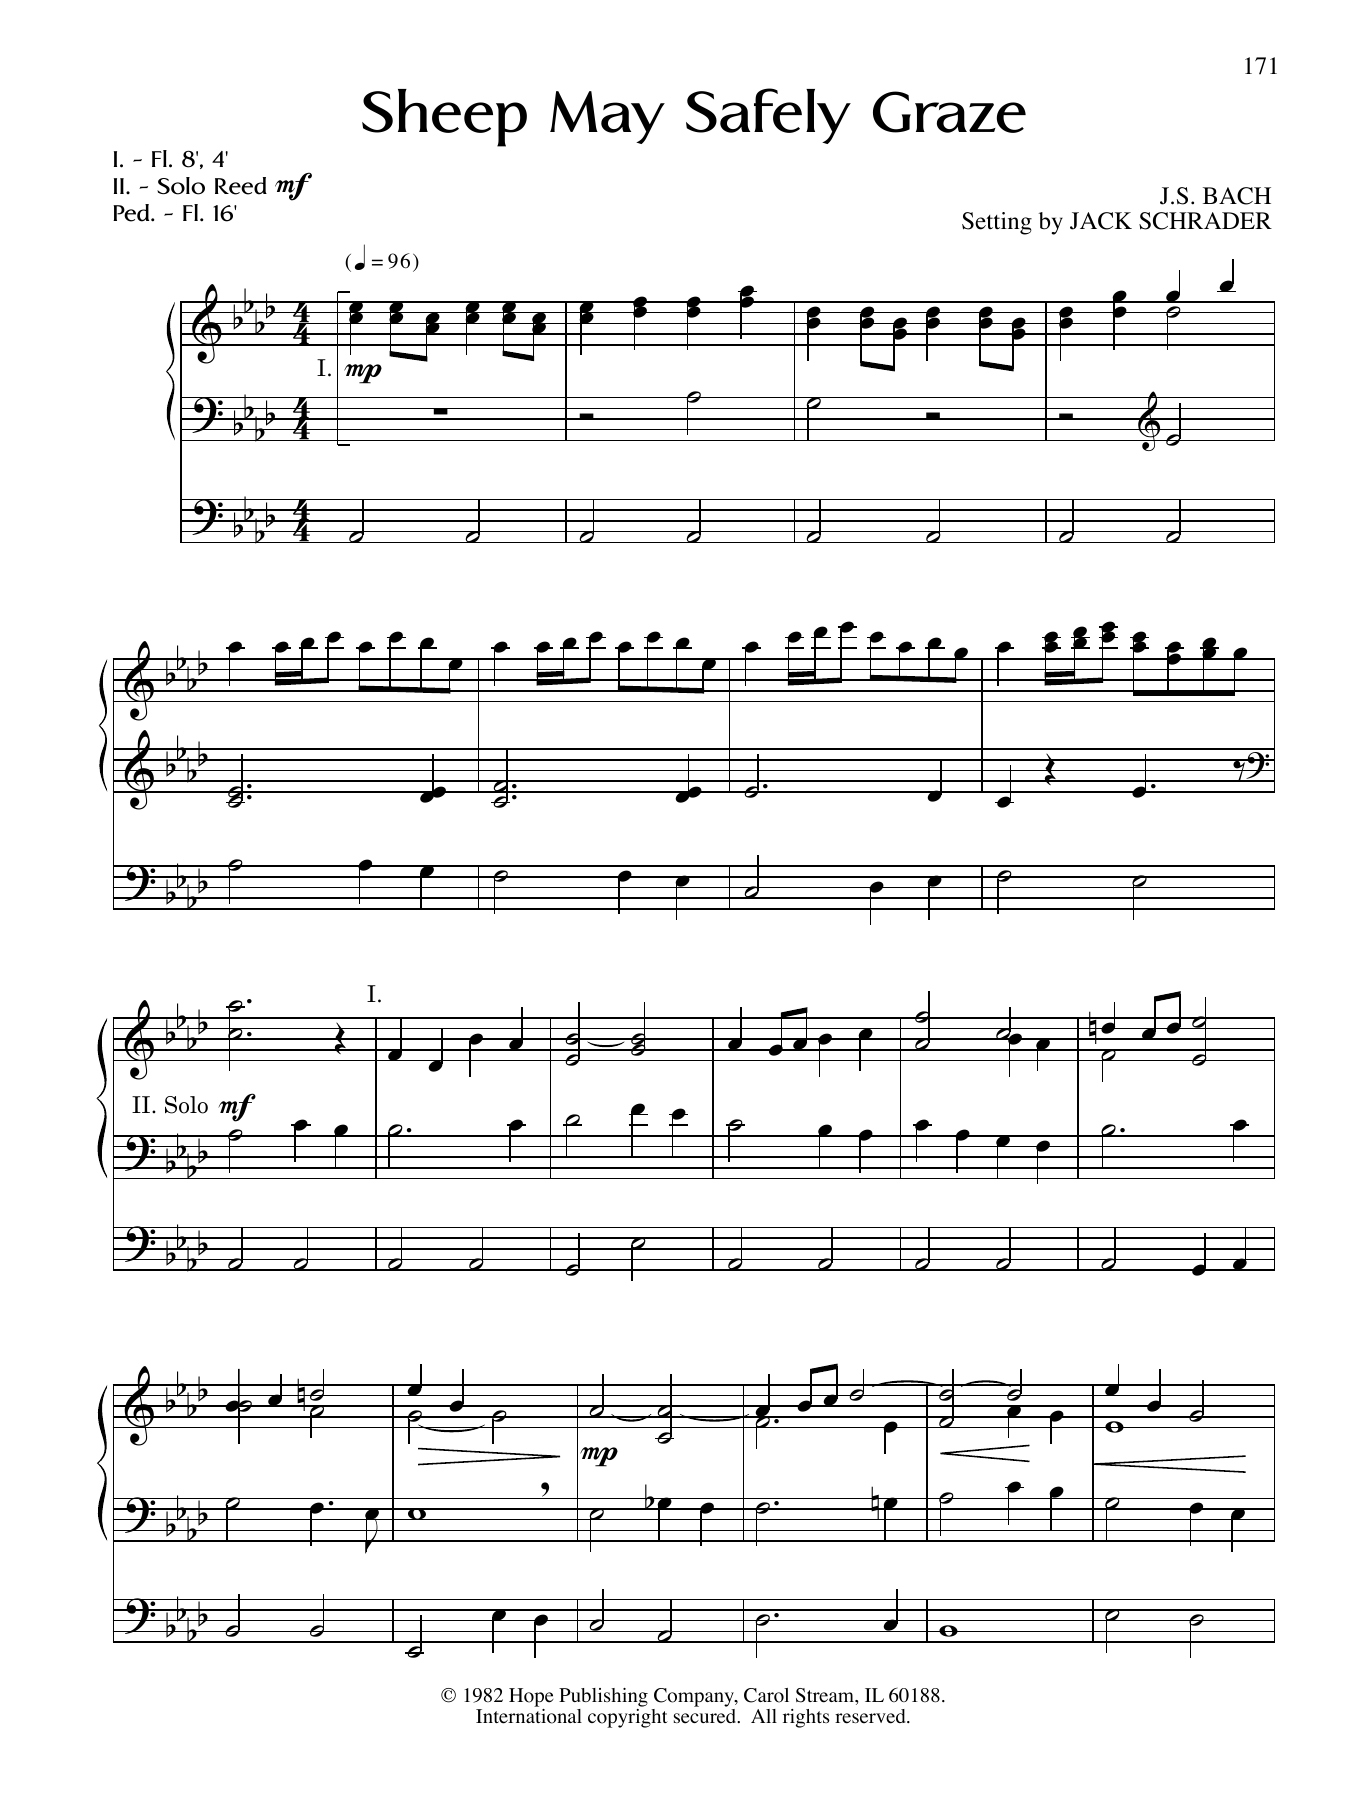 Jack Schrader Sheep May Safely Graze Sheet Music Notes & Chords for Organ - Download or Print PDF